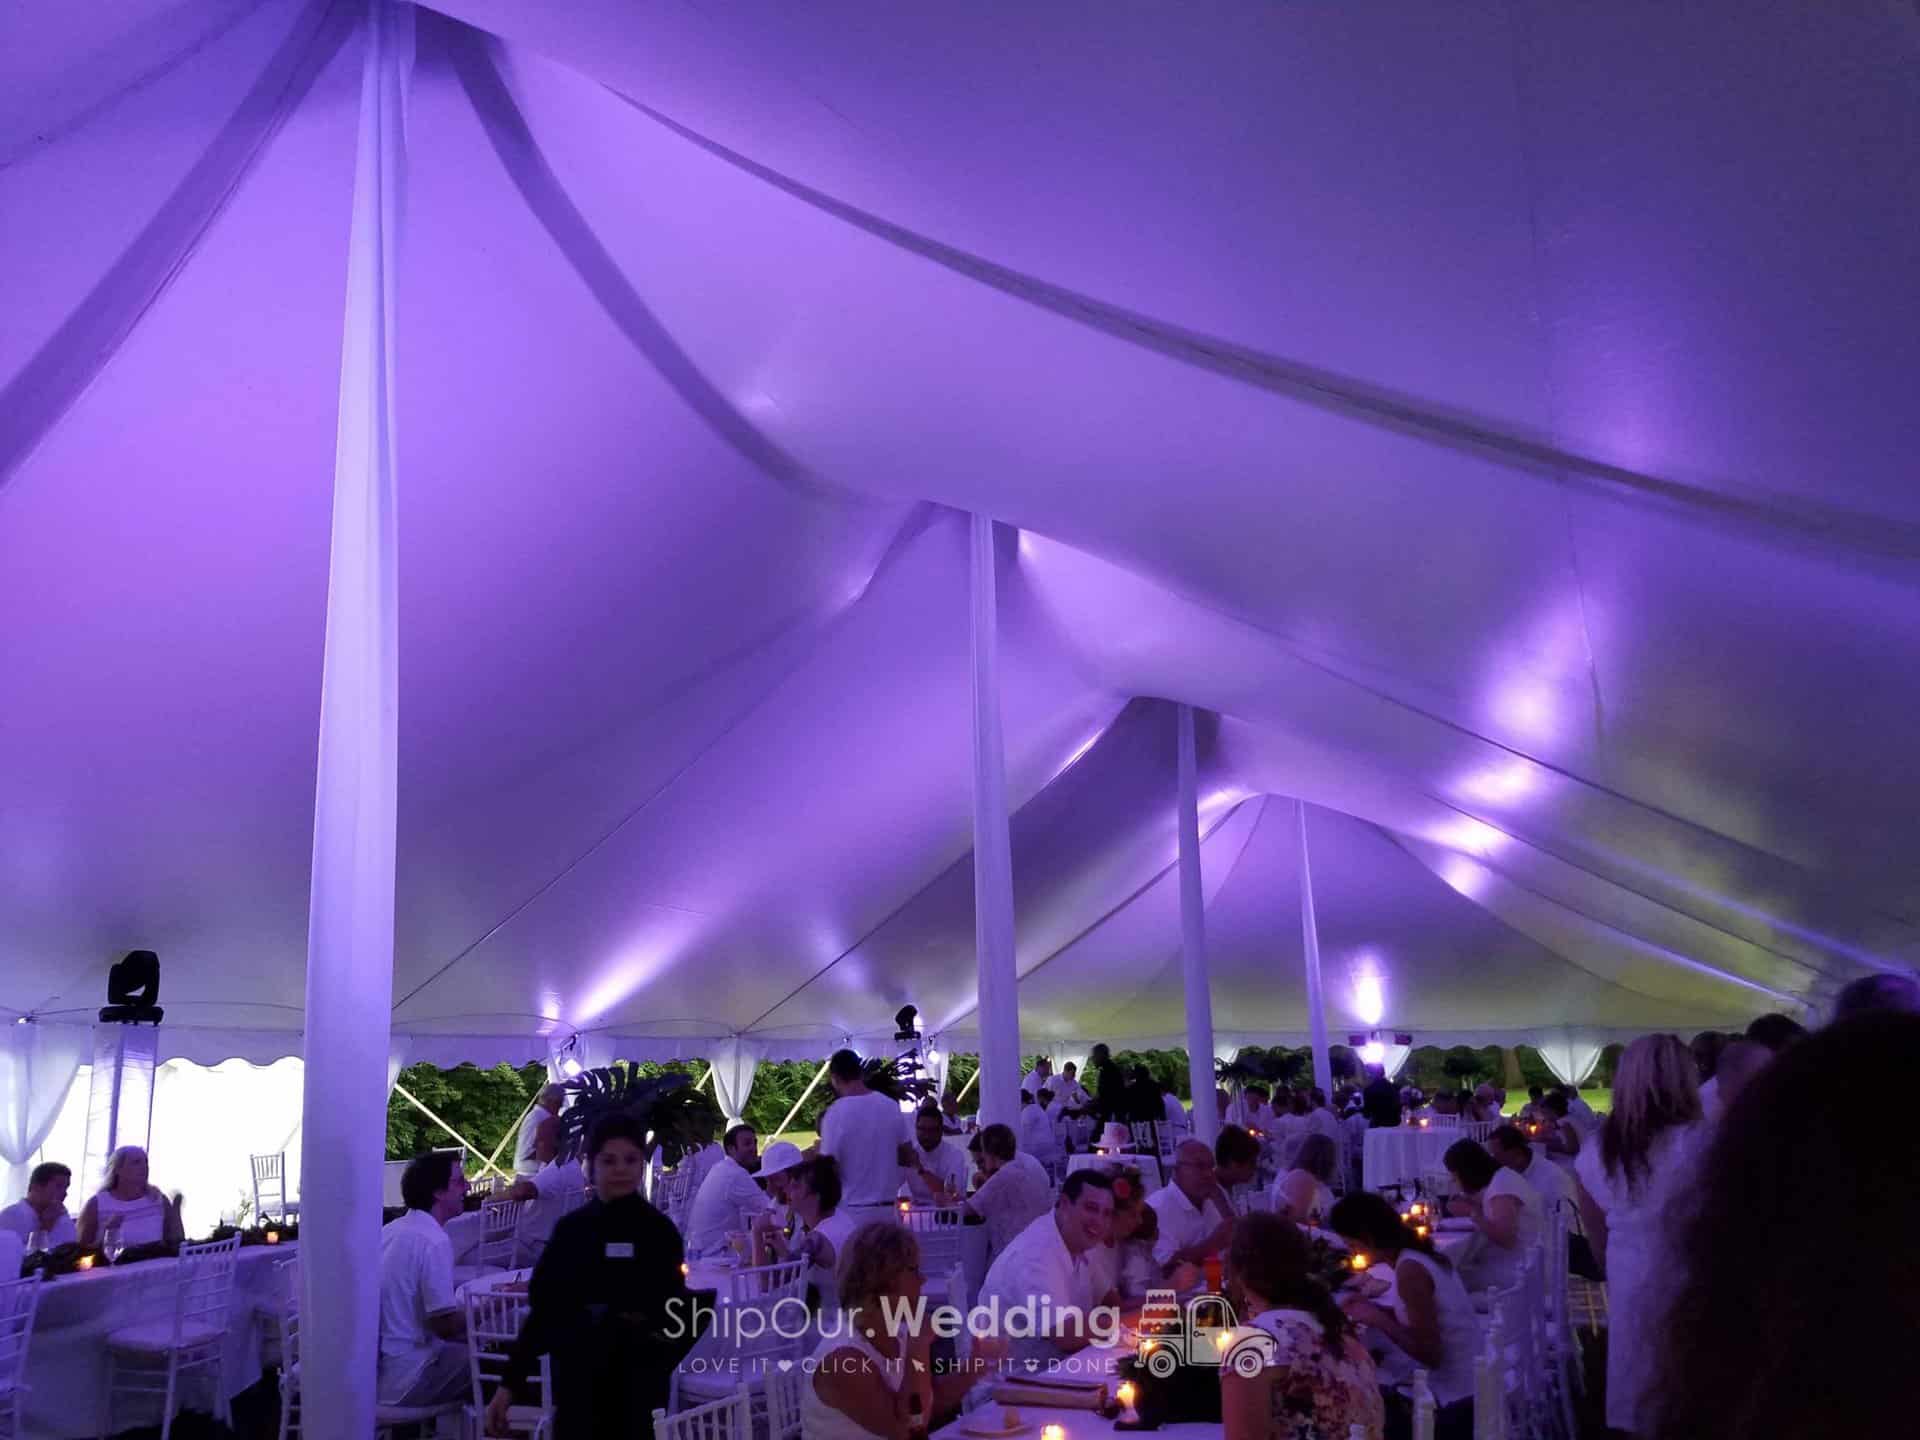 https://shipour.wedding/wp-content/uploads/2017/11/rent_tent_uplights_lavander2-scaled.jpg